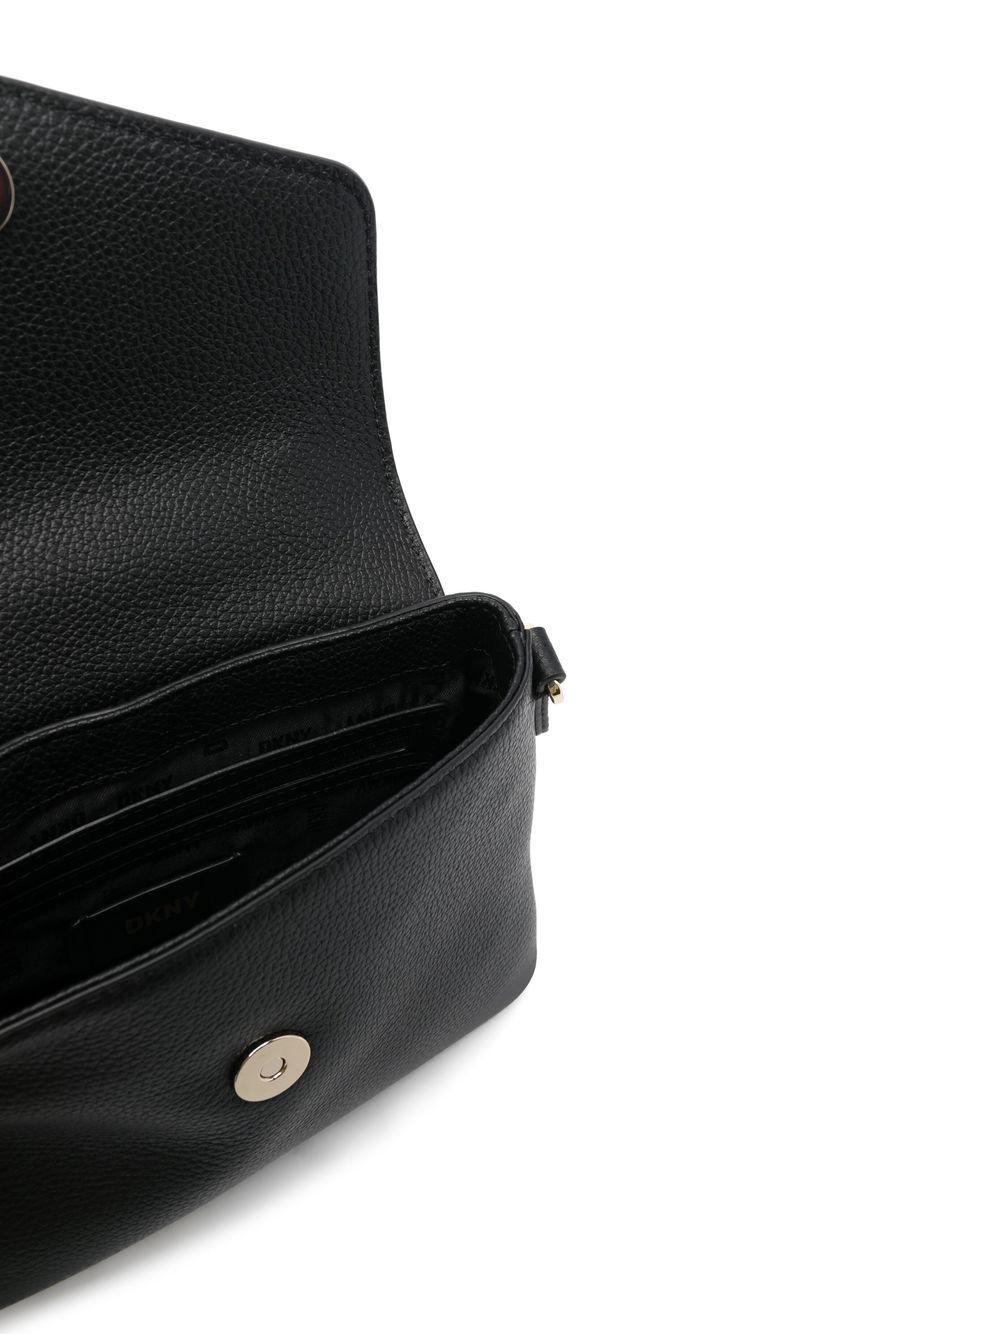 Dkny Women's Millie Leather Top Handle Crossbody Bag in Black